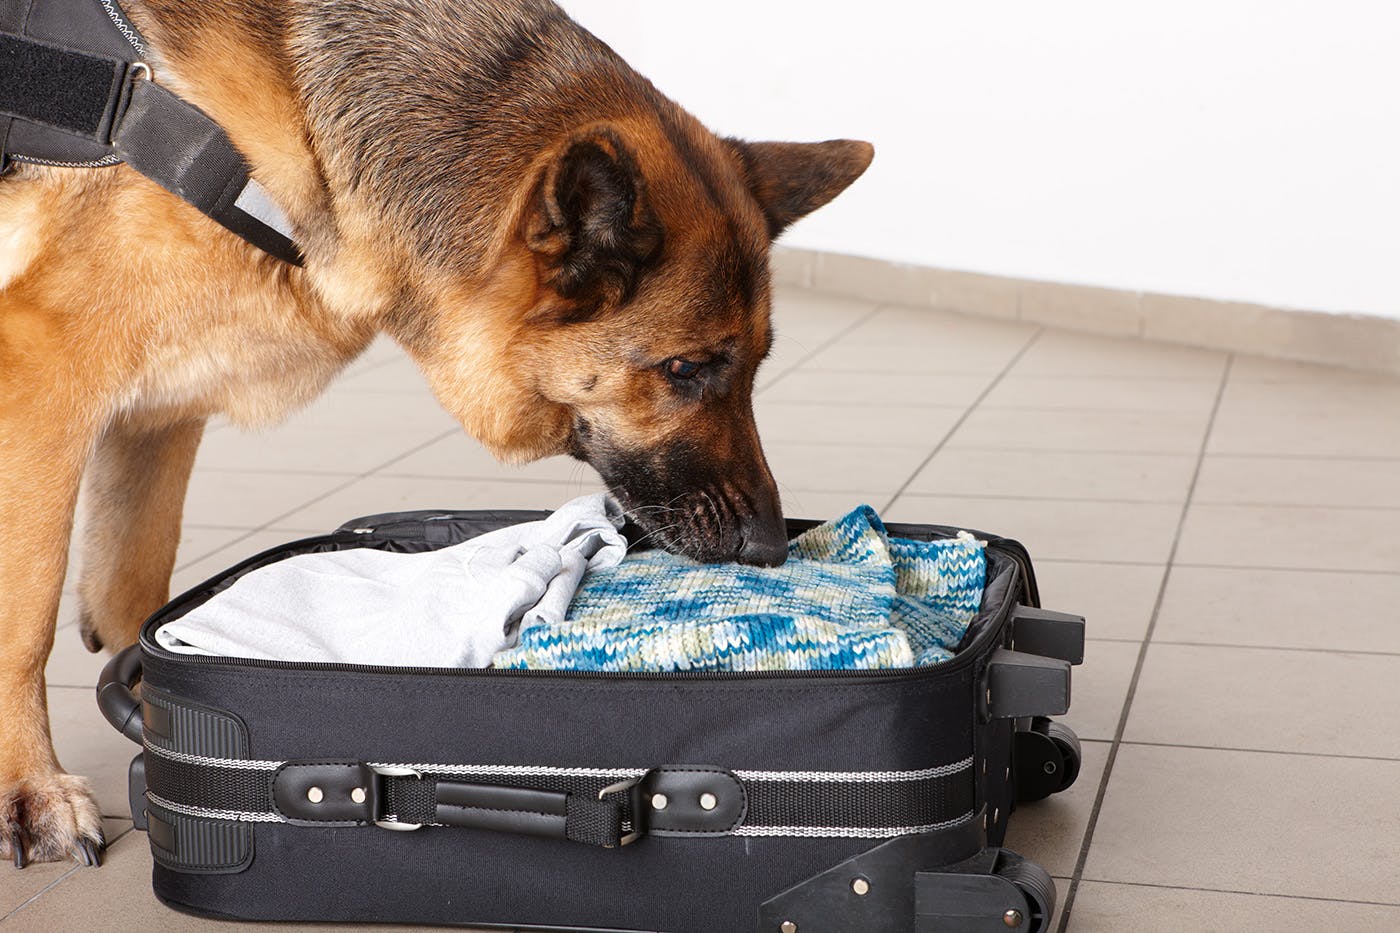 Drug dog sniffing suitcase on floor